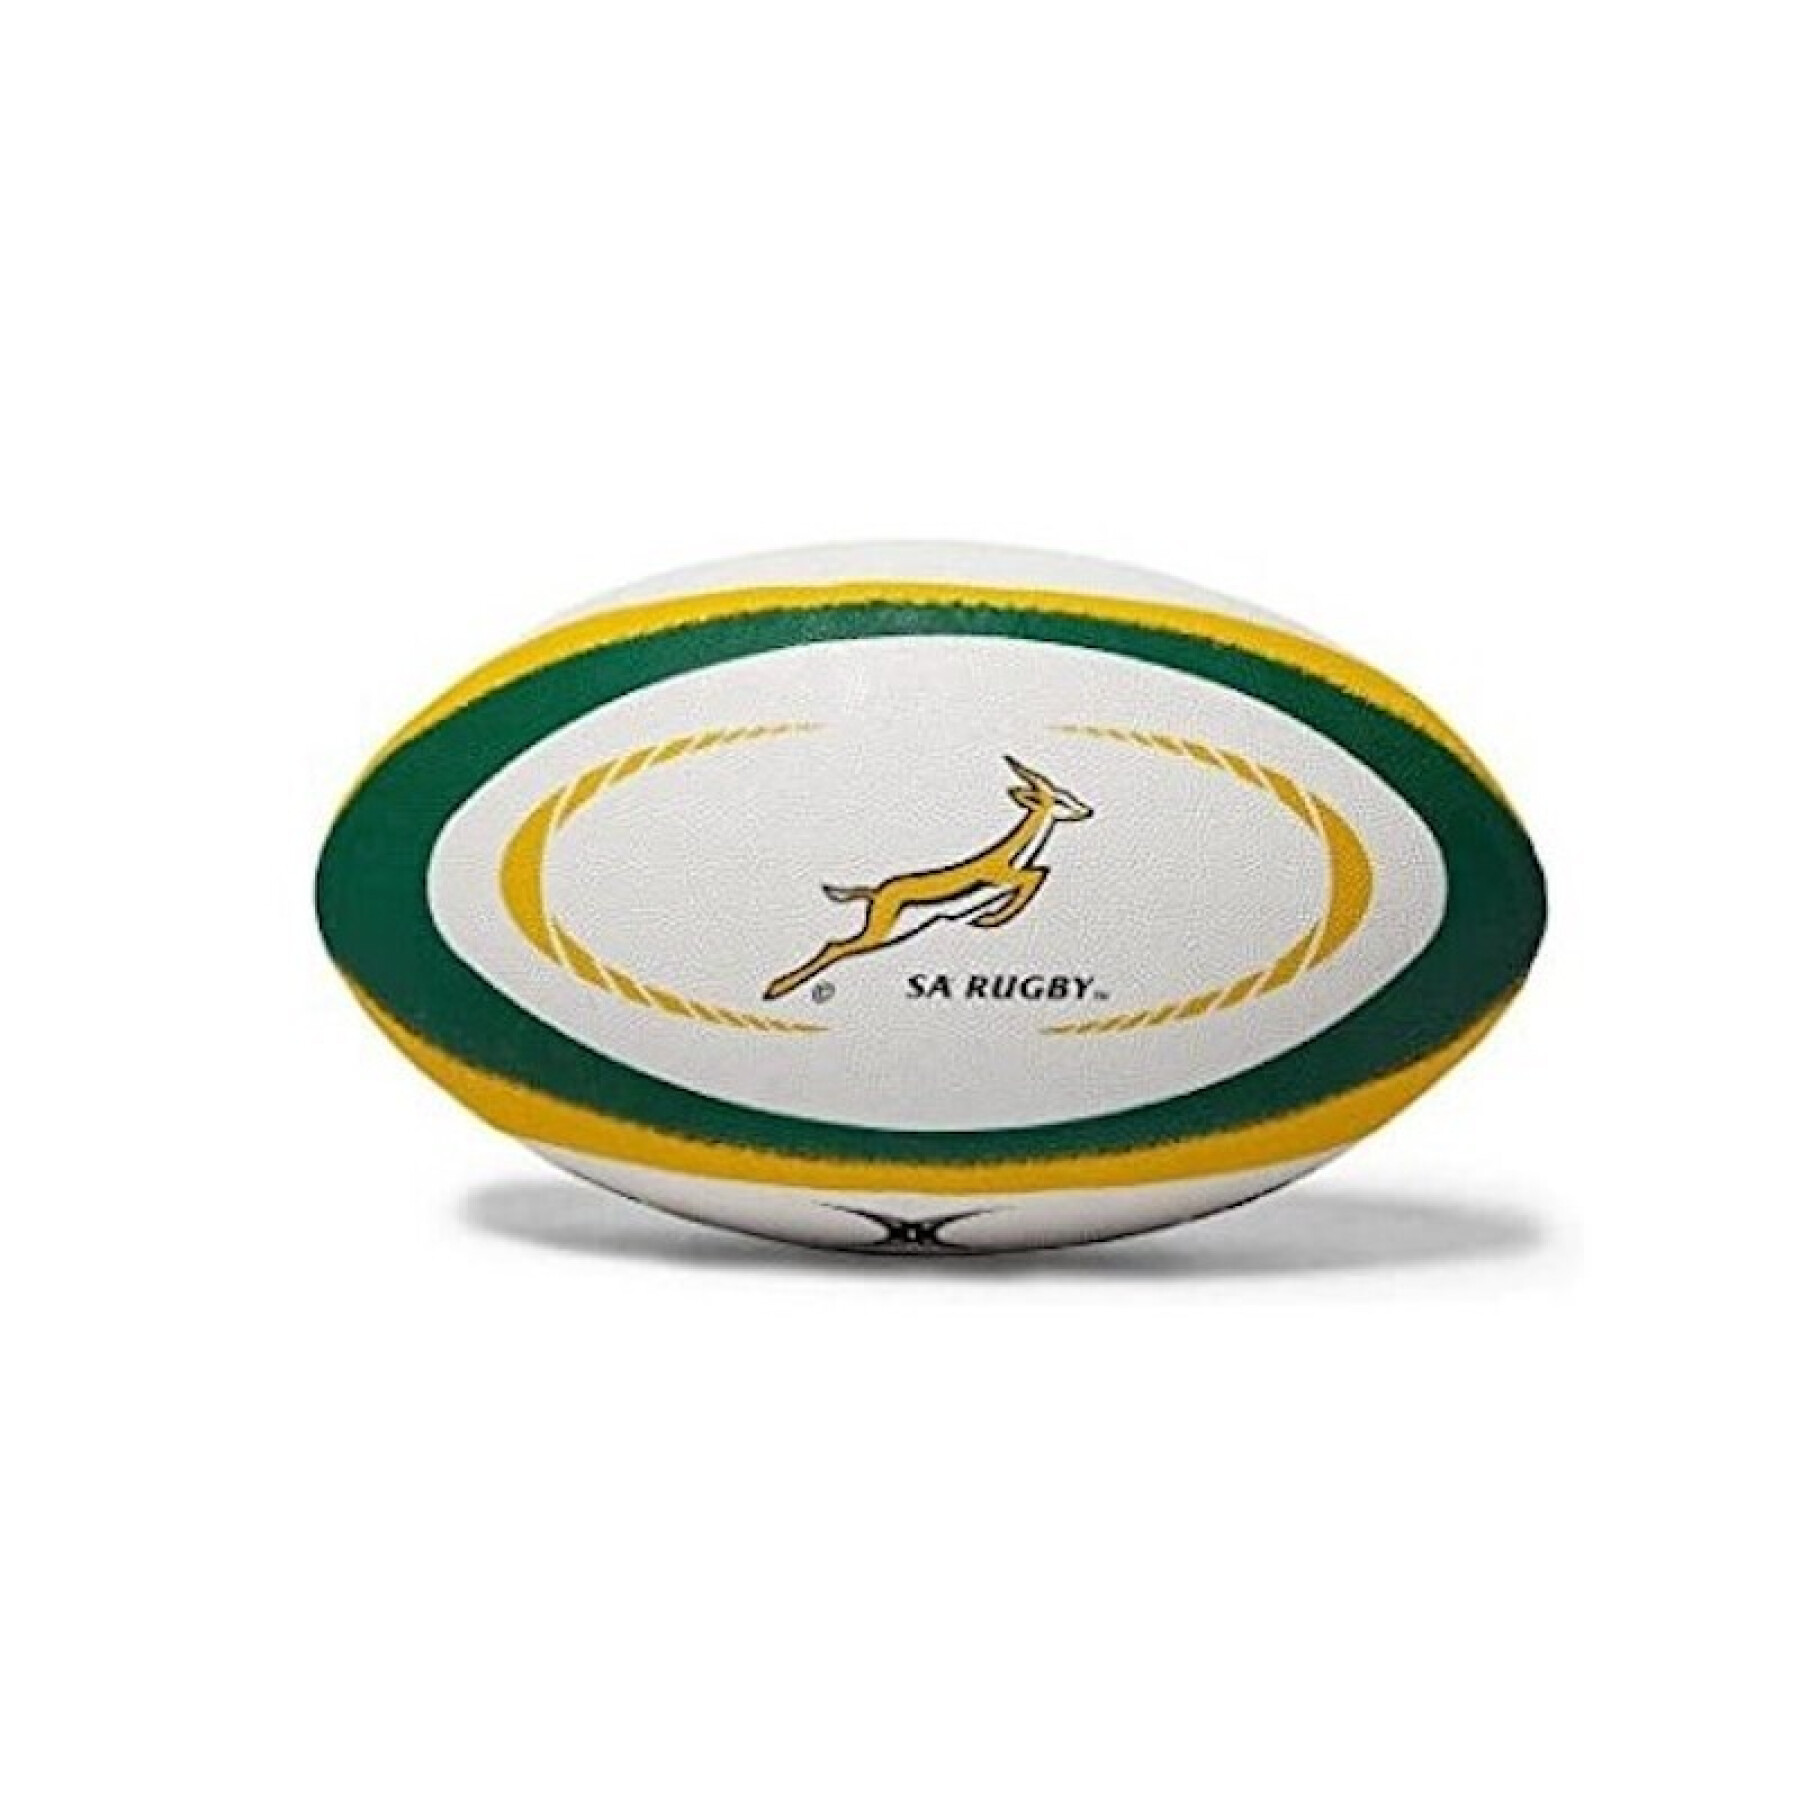 Ballon de rugby Replica Gilbert Afrique du Sud (taille 5)